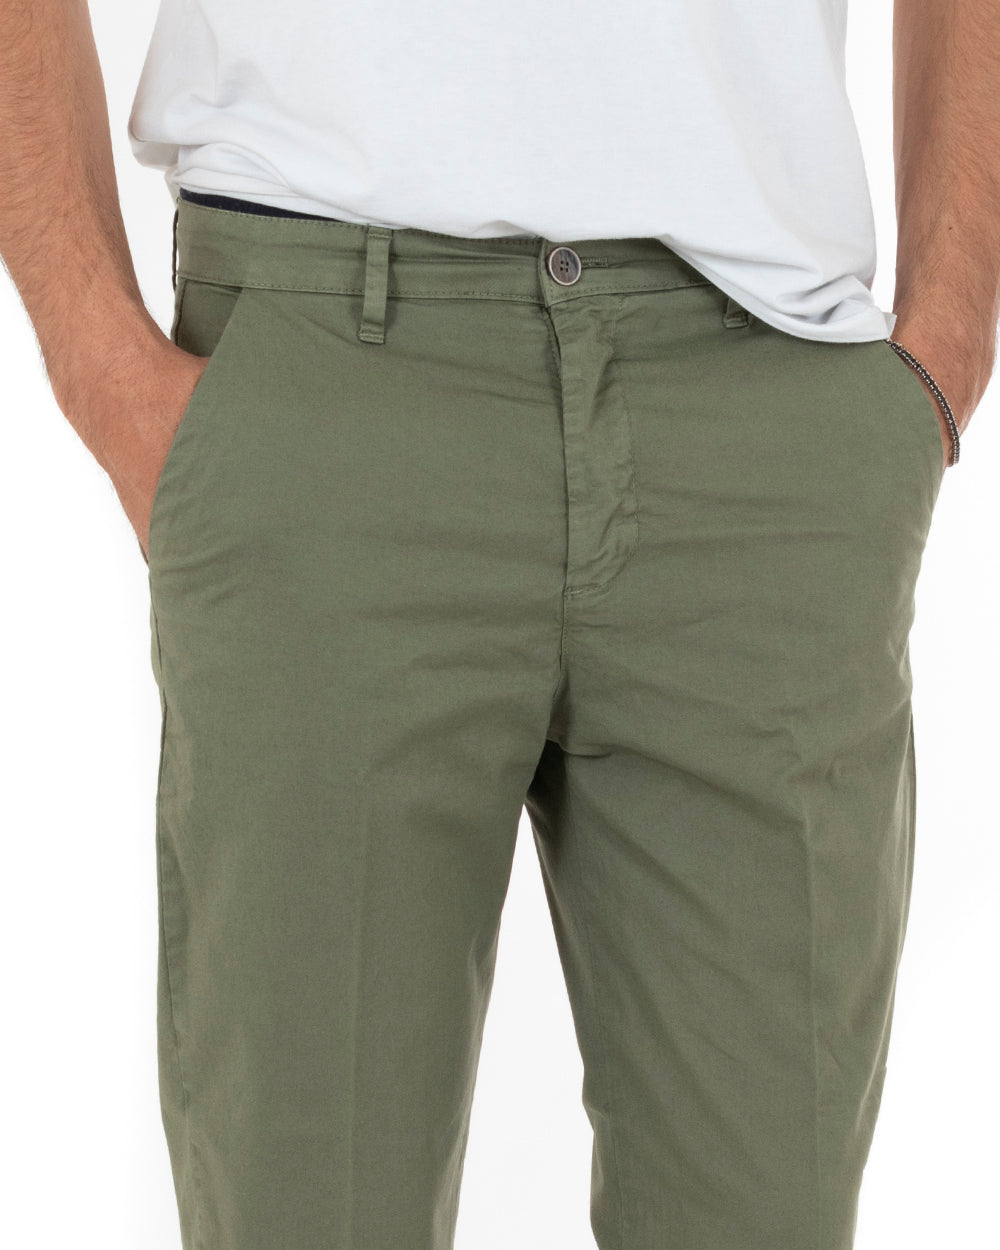 Pantaloni Uomo Cotone Tasca America Chinos Capri Sartoriale Slim Fit Casual Verde GIOSAL-P5692A